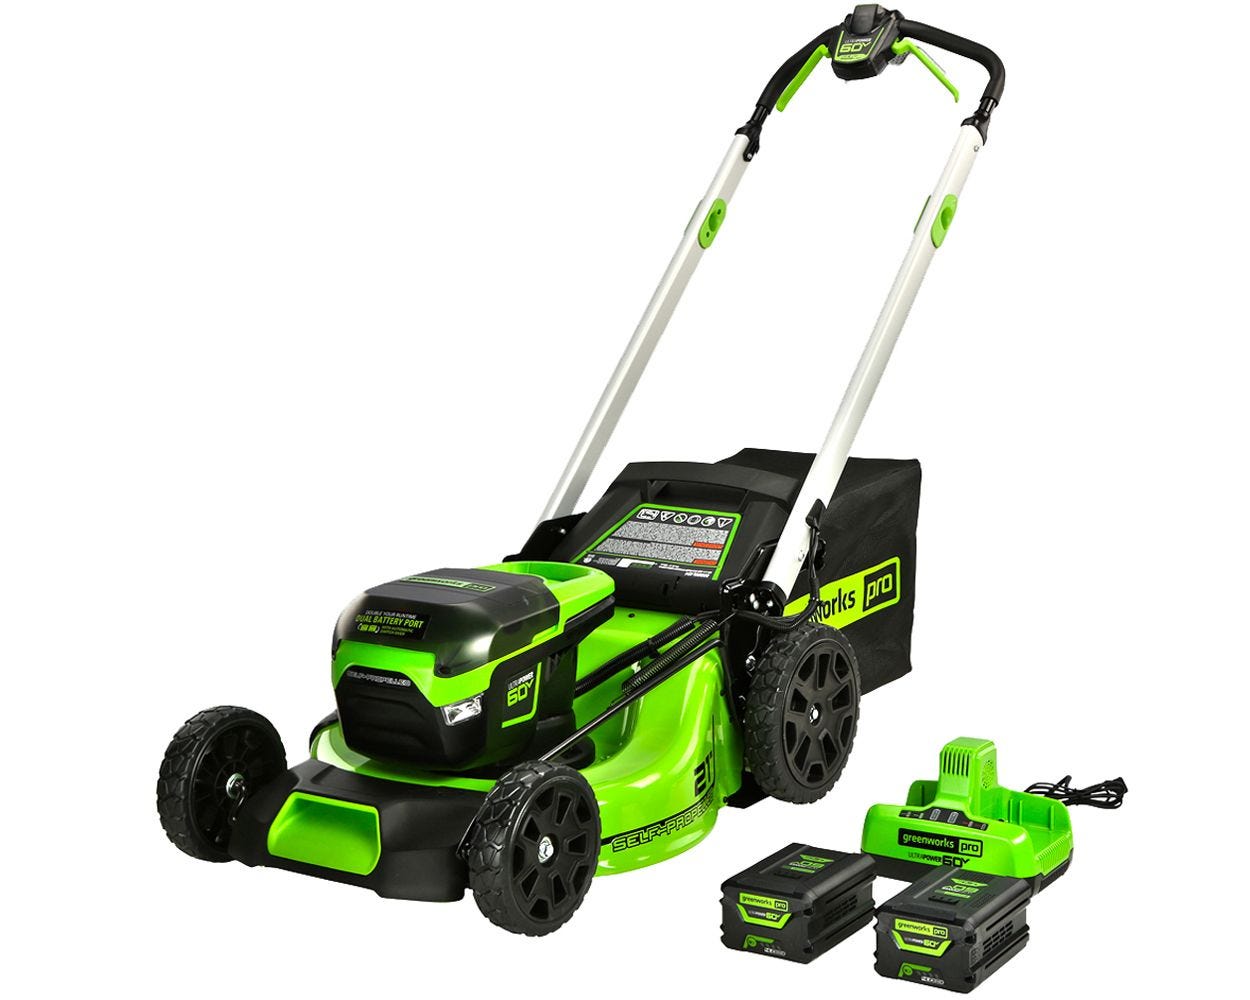 The lawn mower 5.0 ultra. GREENWORKS 60v. GREENWORKS 60v культиватор. Лопата GREENWORKS 60v. Робот газонокосилка GREENWORKS.